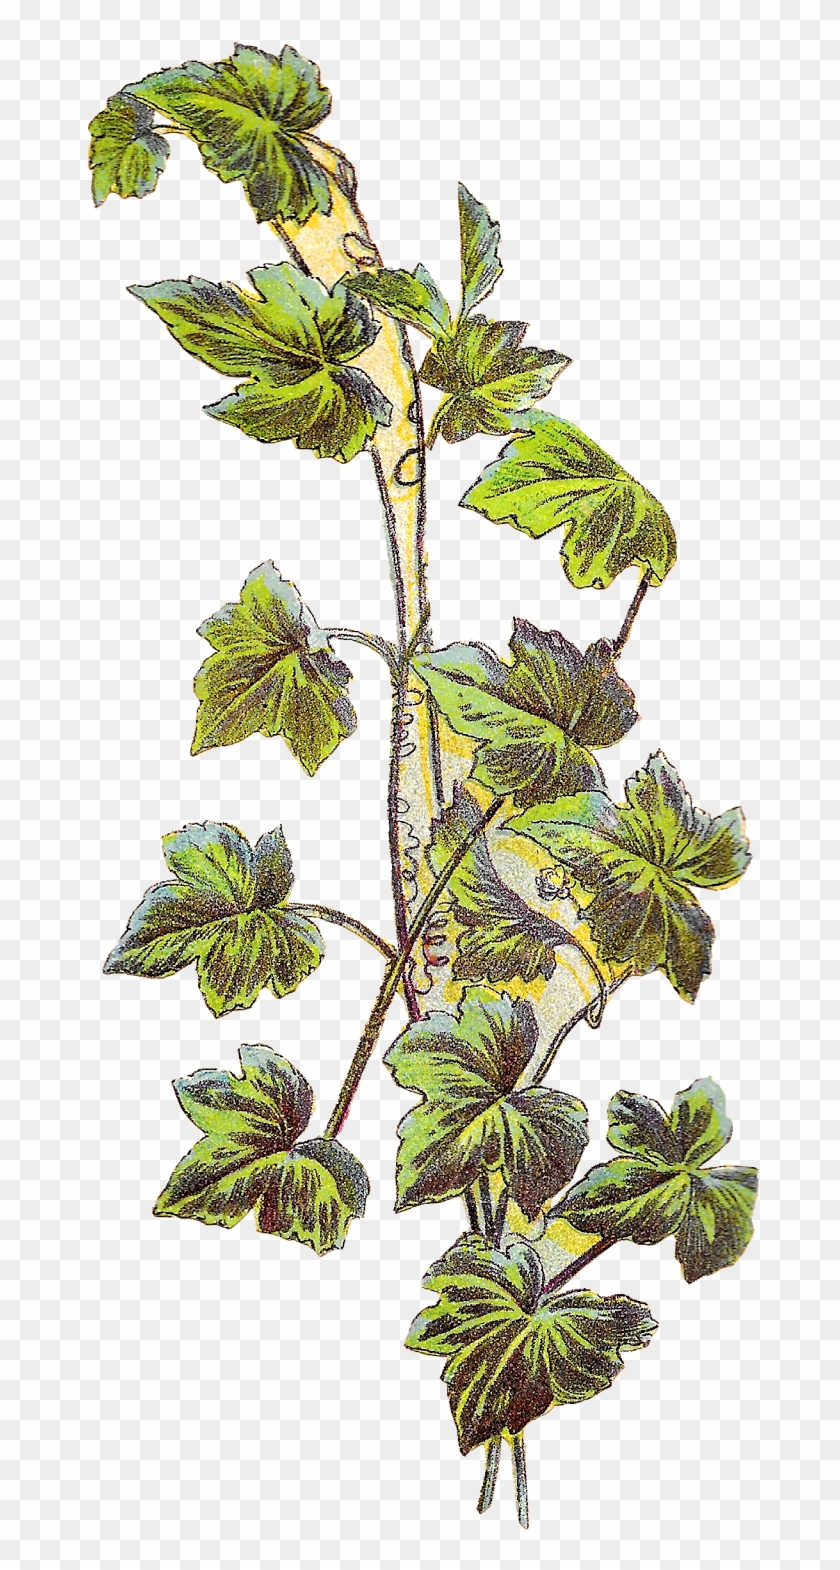 Grape Vine Plant Image - Botanical Illustration Grape Vine Clipart #2850937